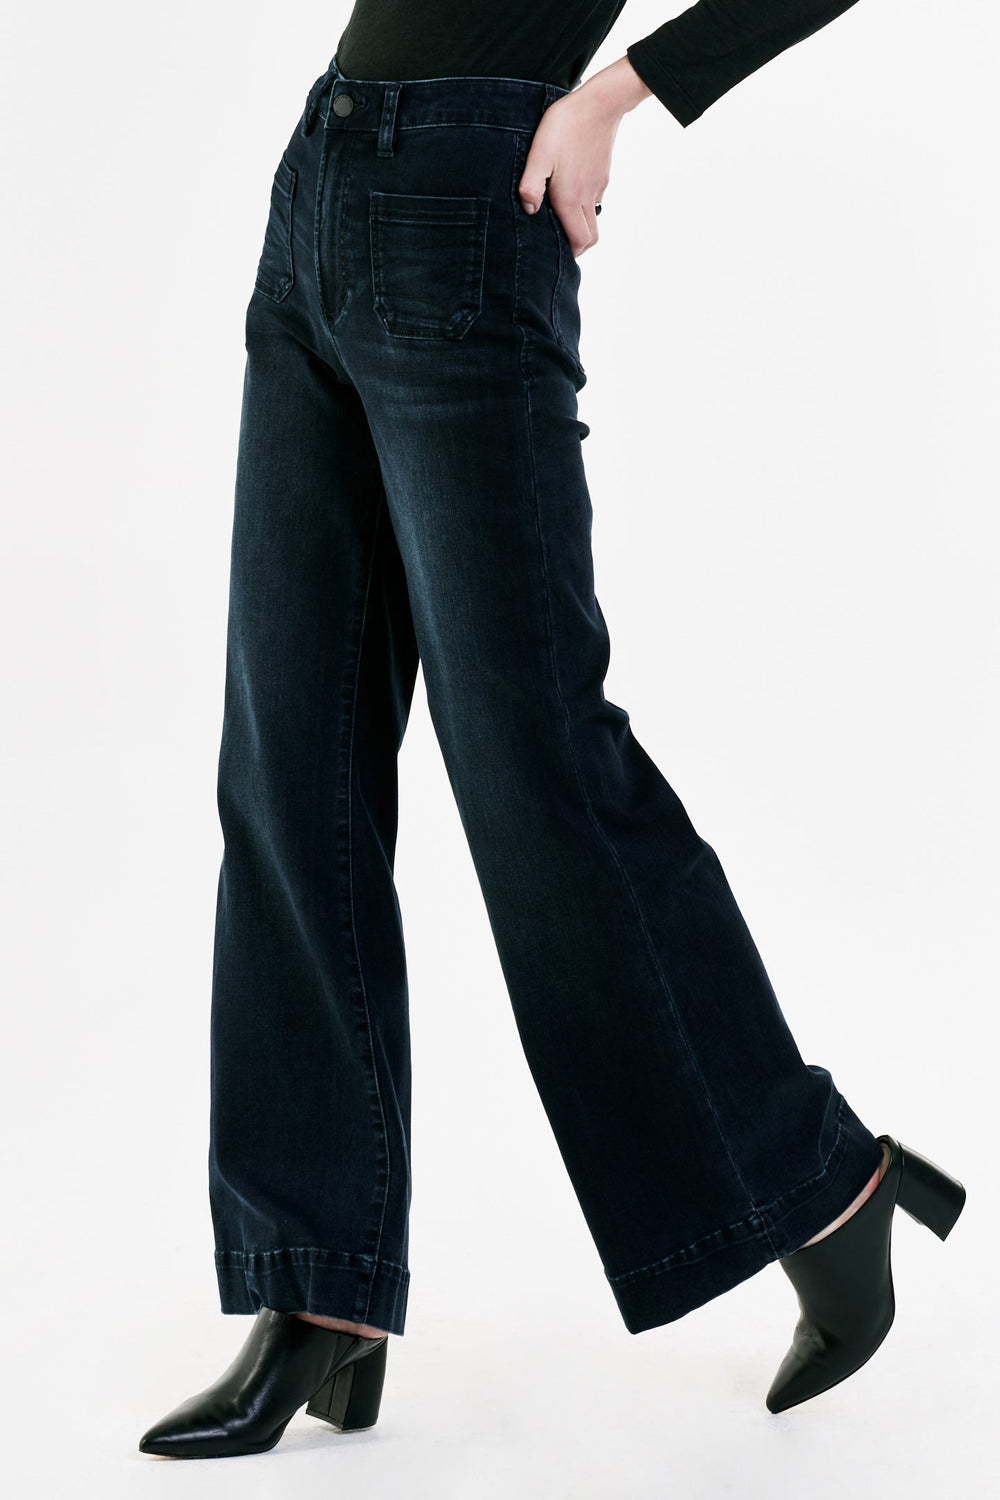 image of a female model wearing a FIONA SUPER HIGH RISE WIDE LEG JEANS CONFESSION DEAR JOHN DENIM 